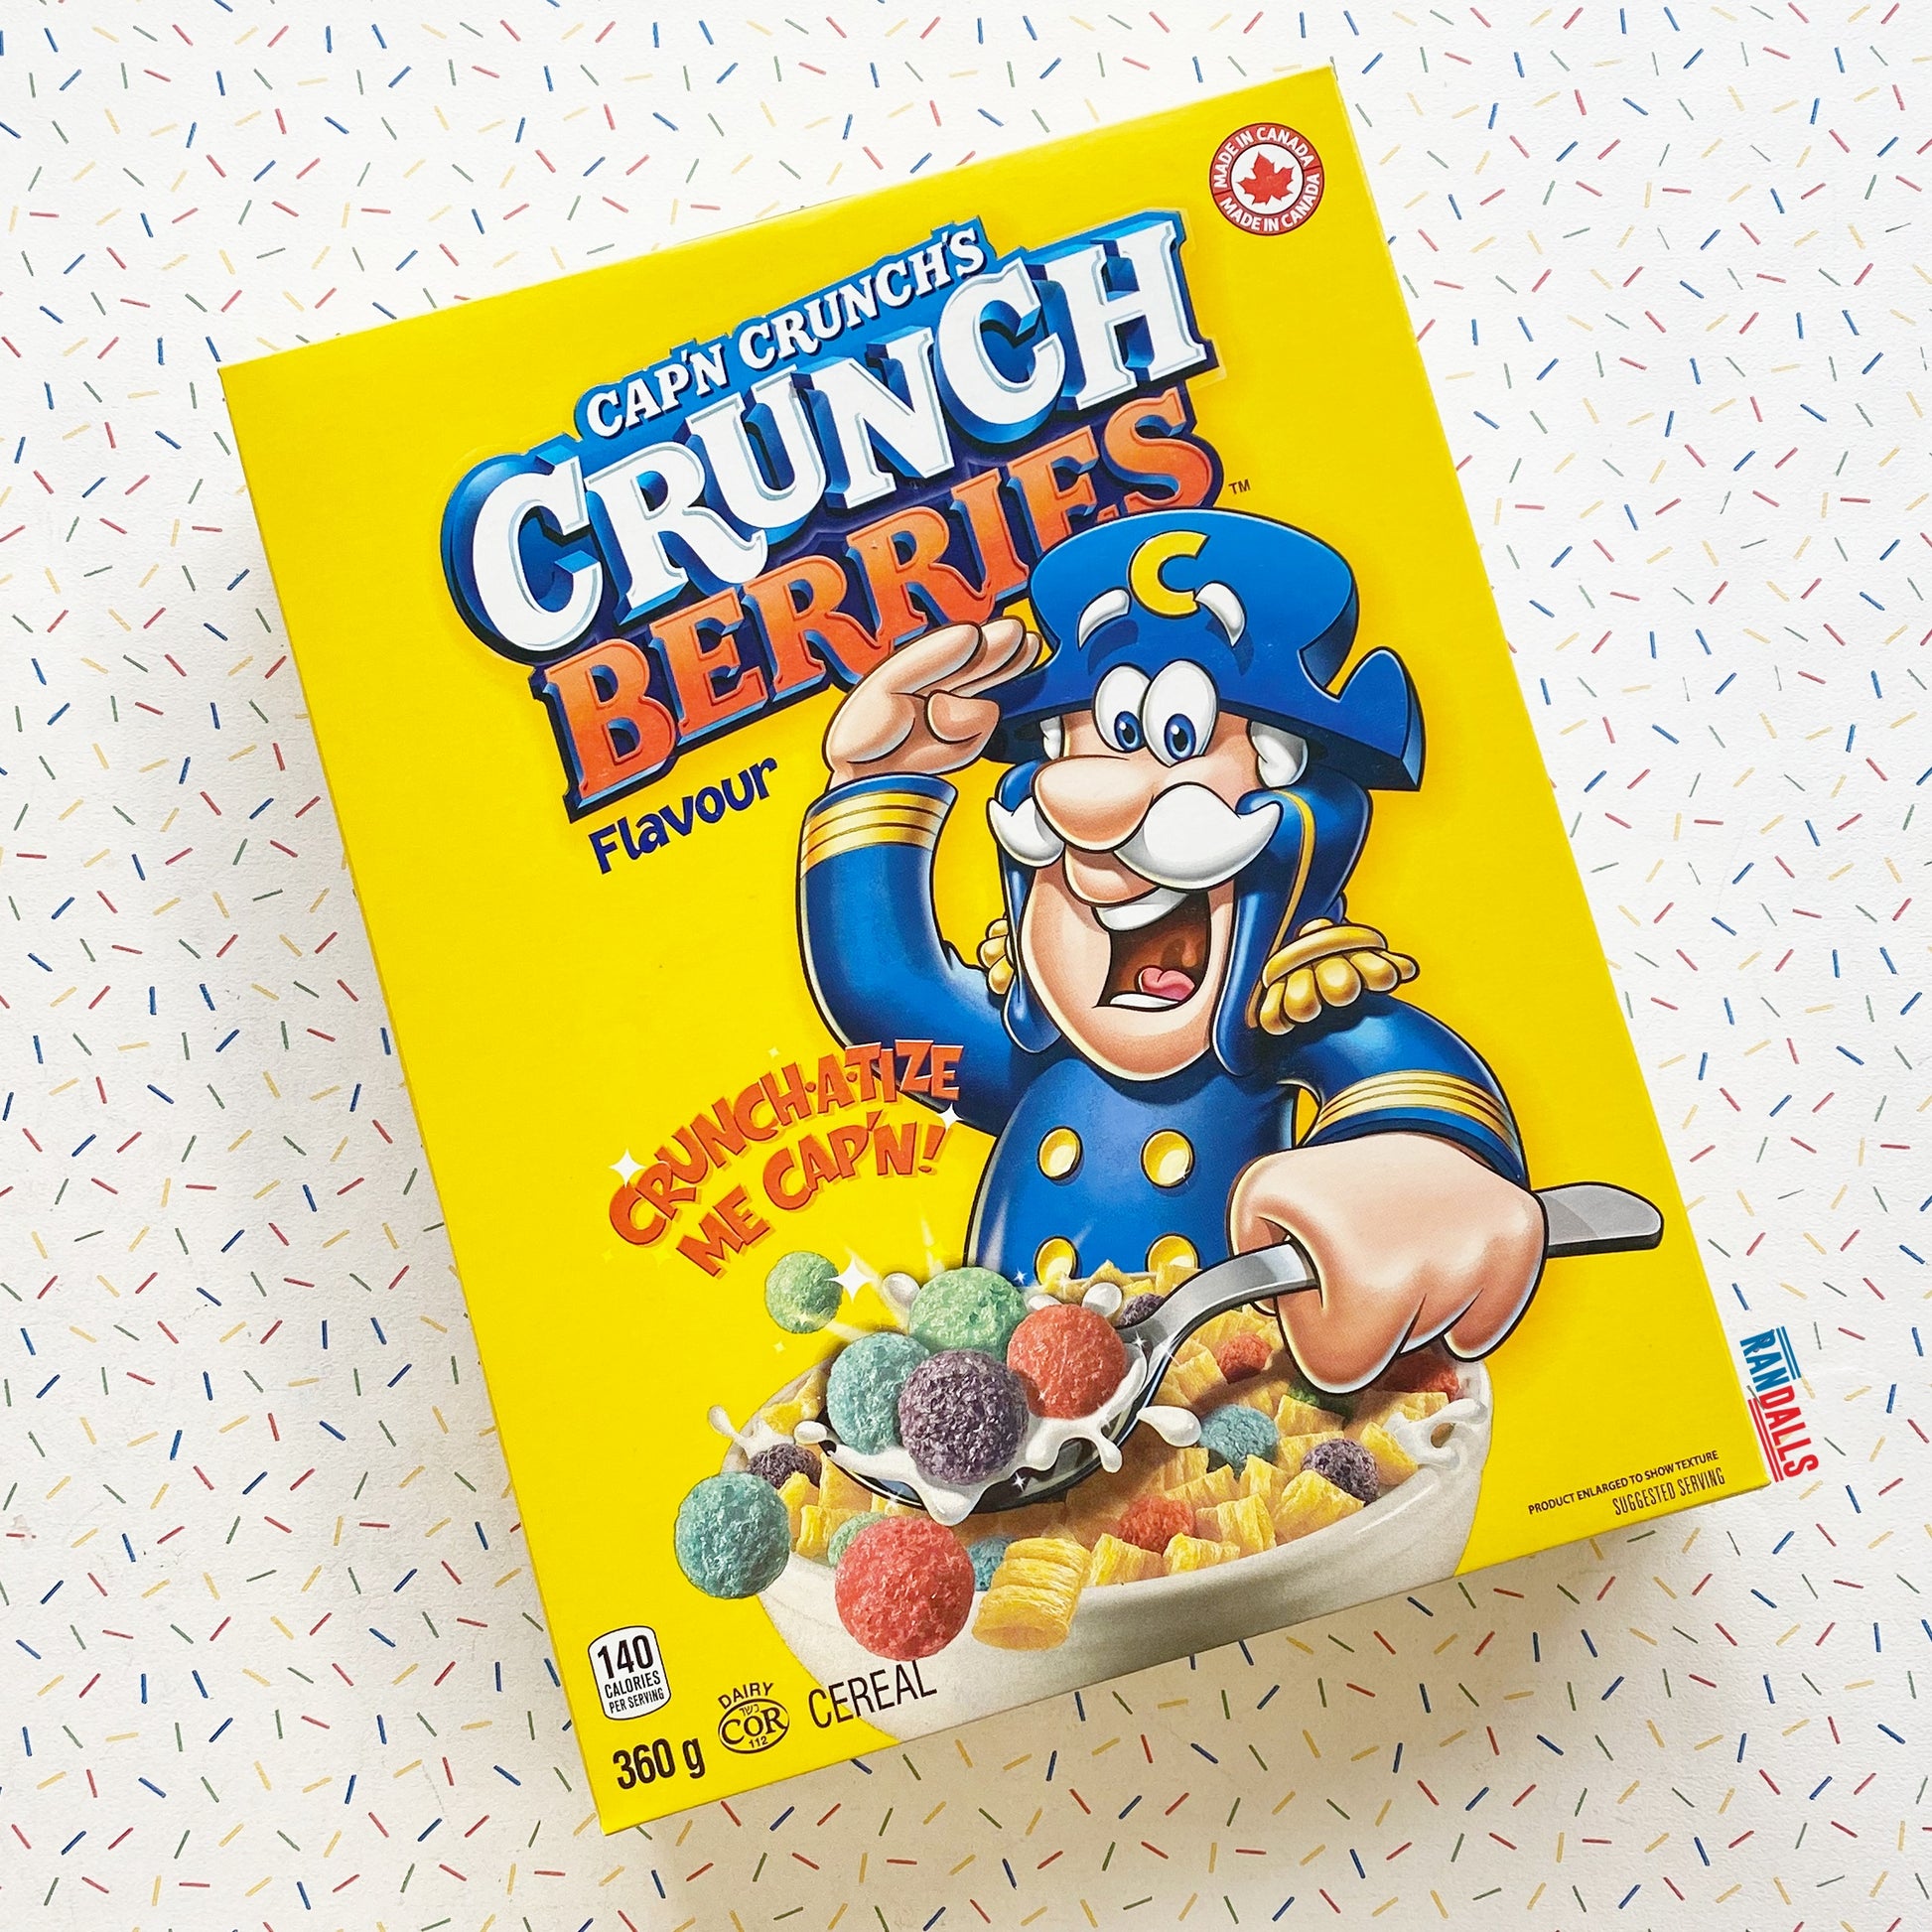 cap'n crunch, captain crunch cereal, cap'n crunch berries, captain crunch berries, canada, canadian cereal, randalls,